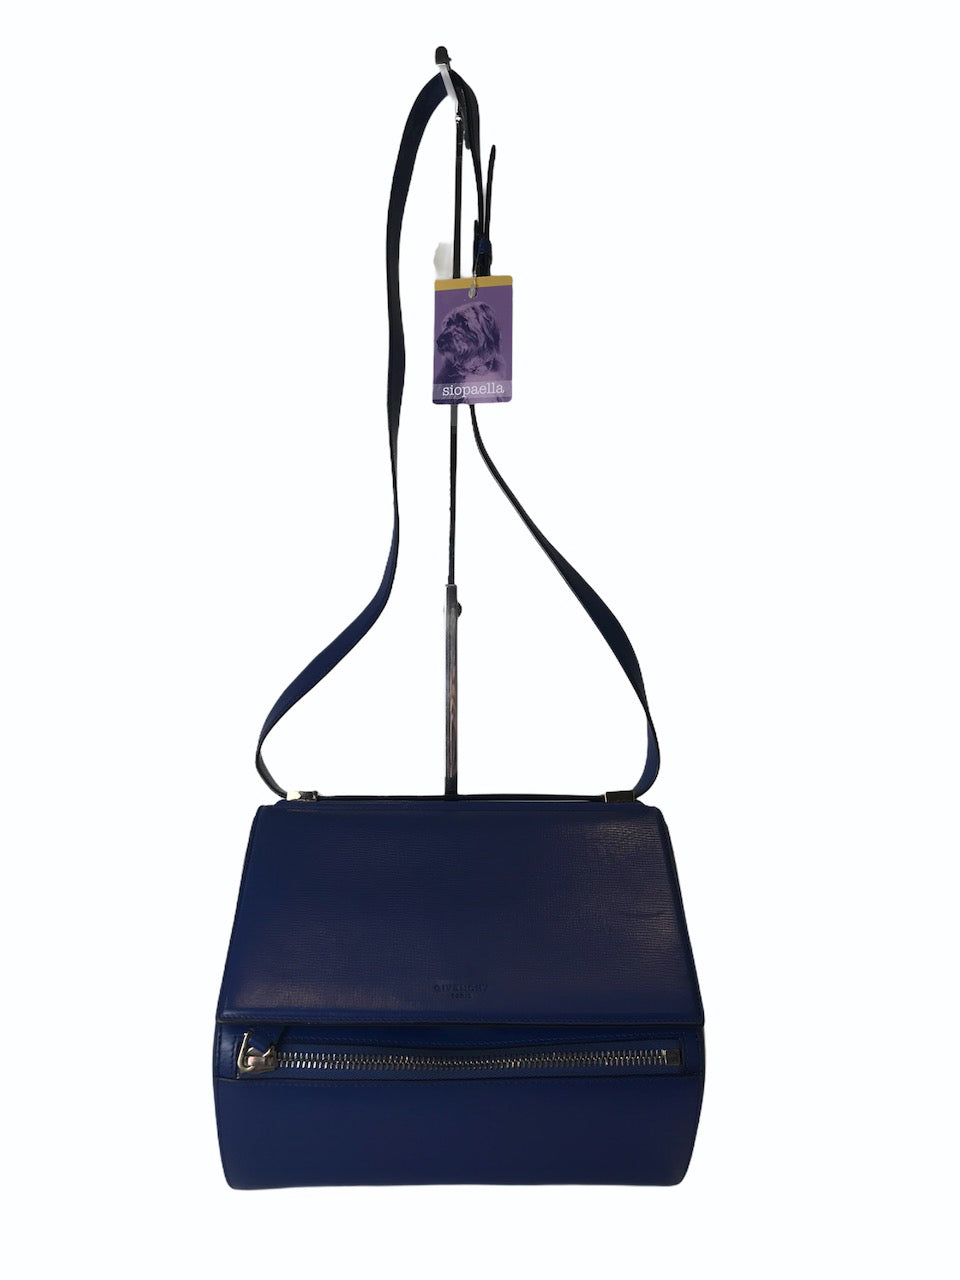 Givenchy Blue Leather Pandora Crossbody- As Seen On Instagram 09/09/2020 - Siopaella Designer Exchange